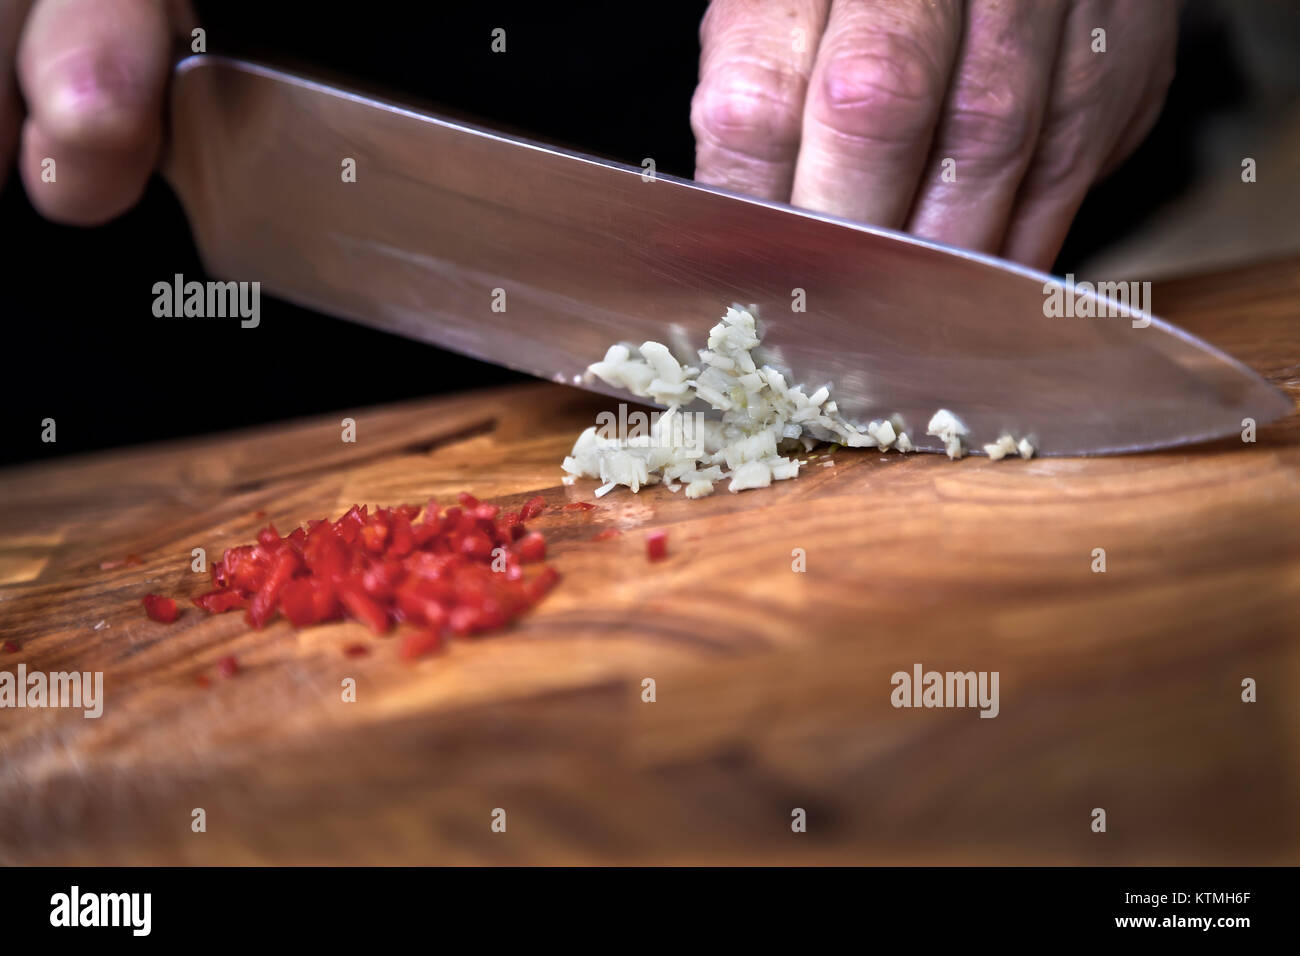 Food preparation - dicing garlic on chopping board Stock Photo